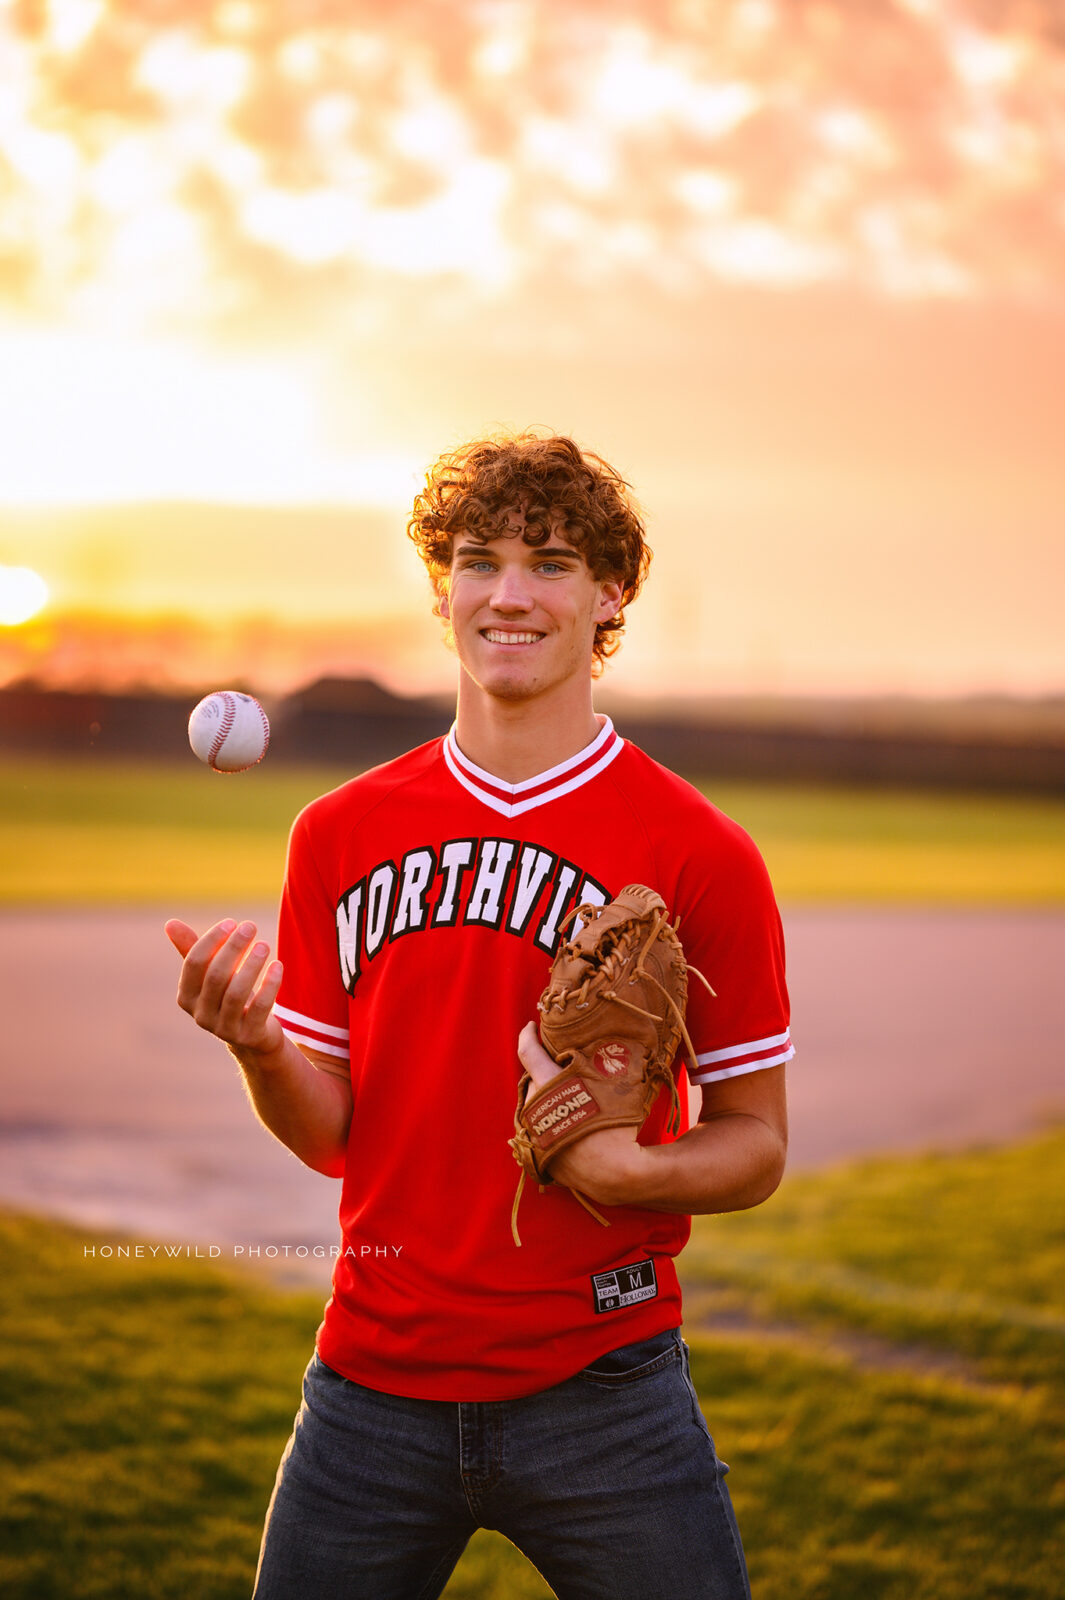 grand rapids senior boy at sunset smiling while throwing a baseball